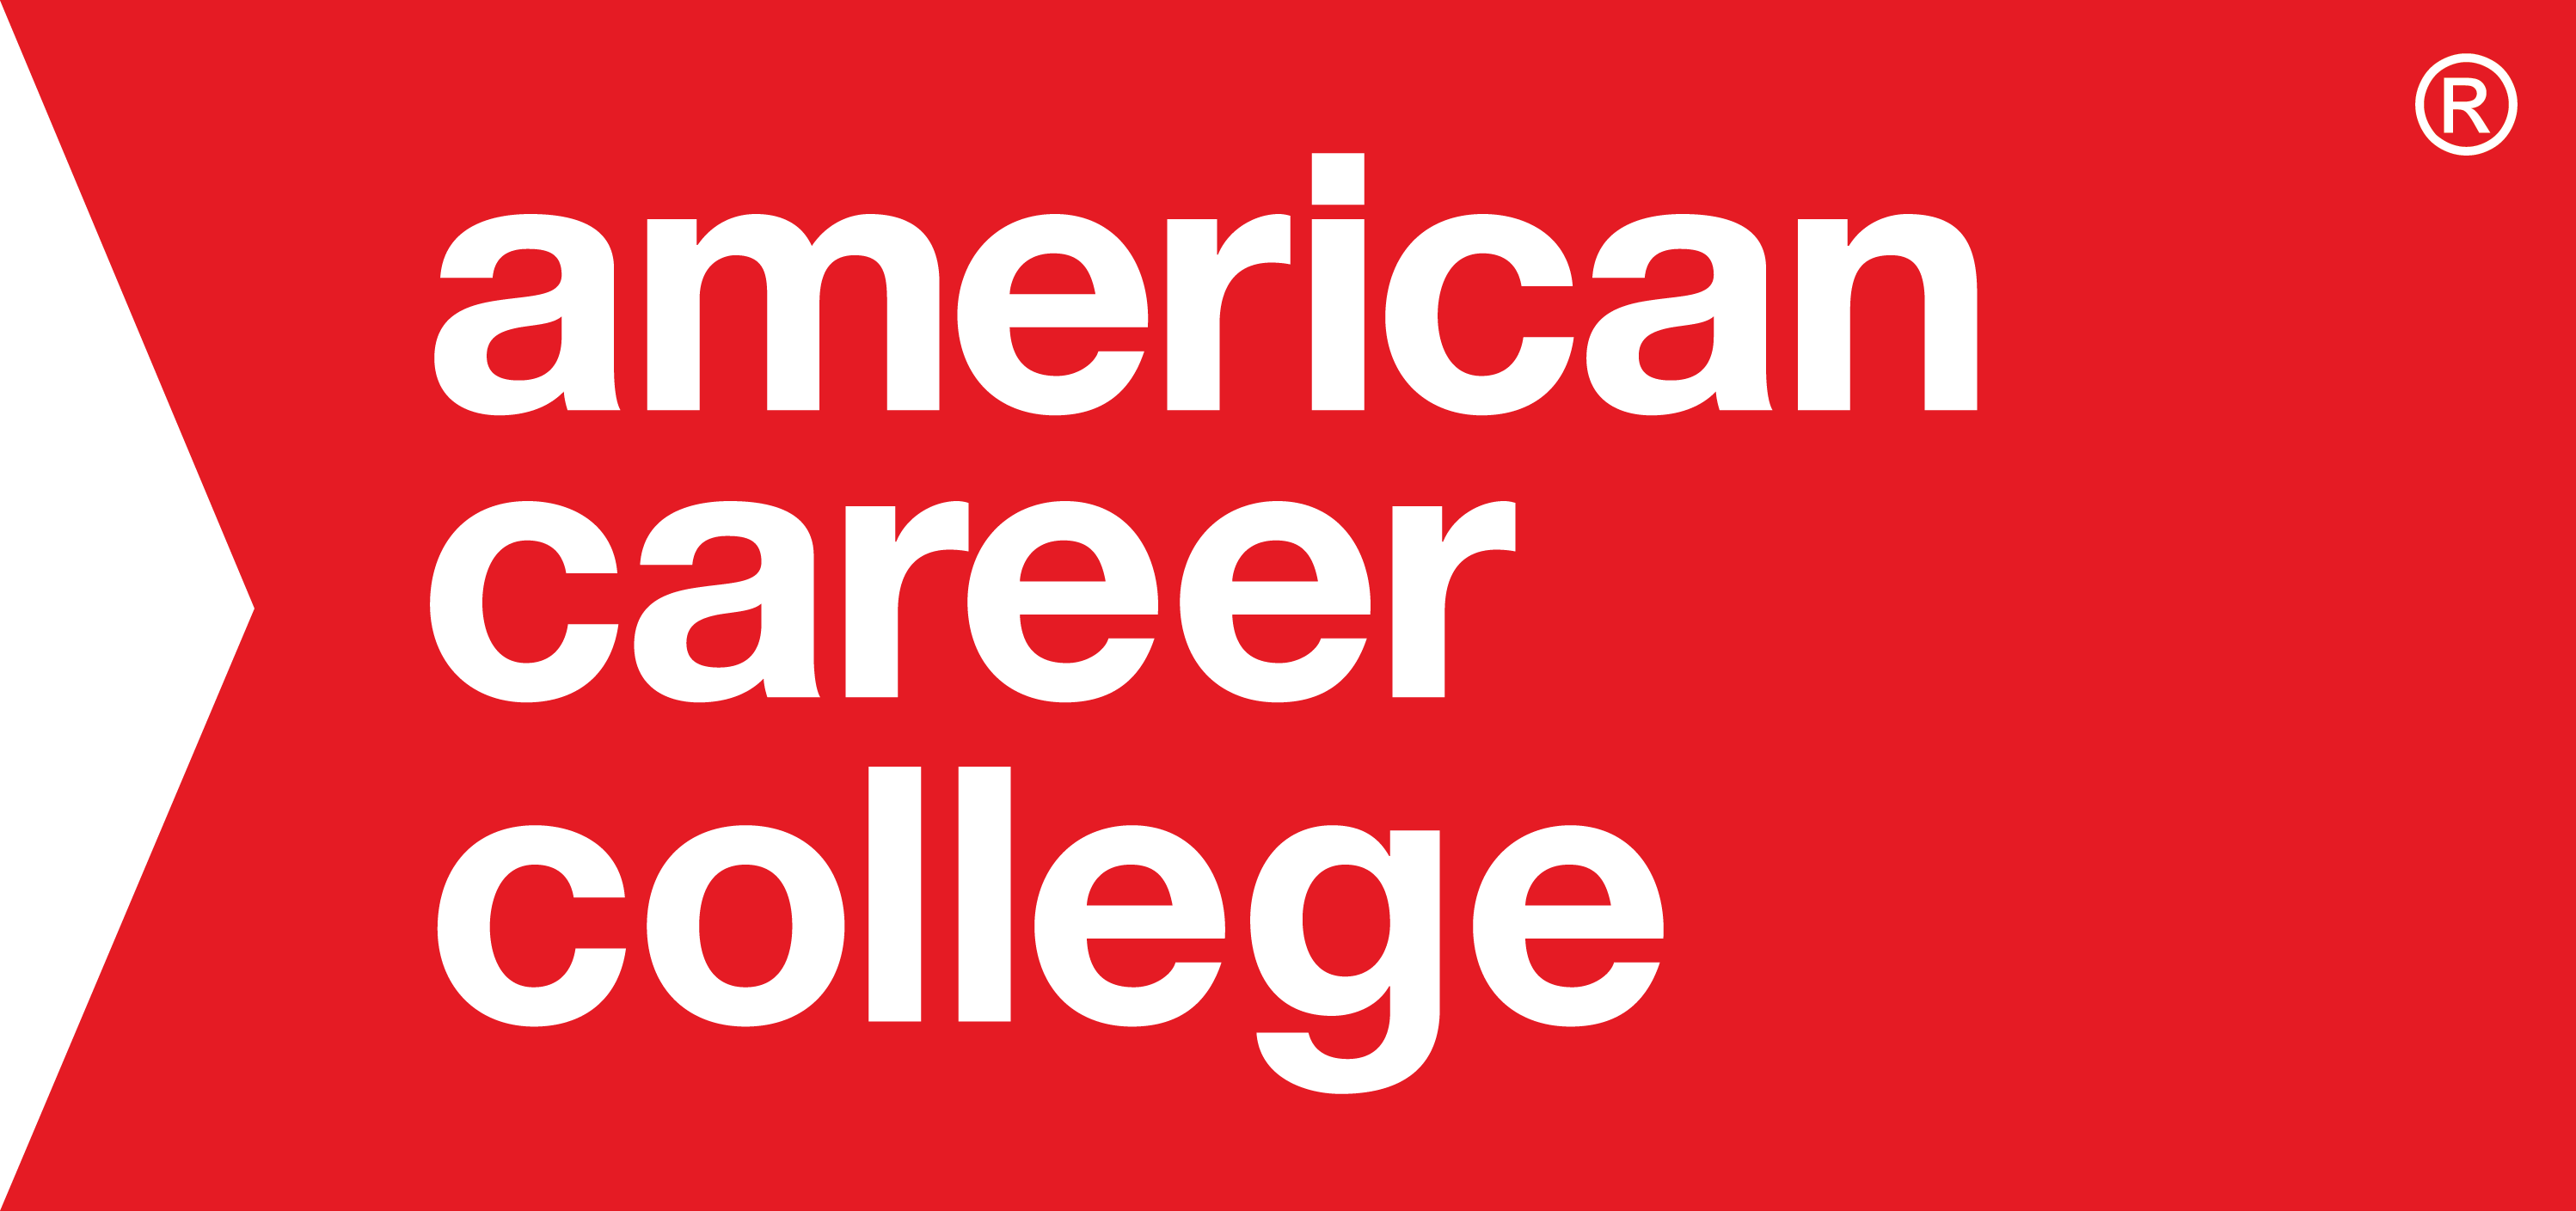 American Career College logo